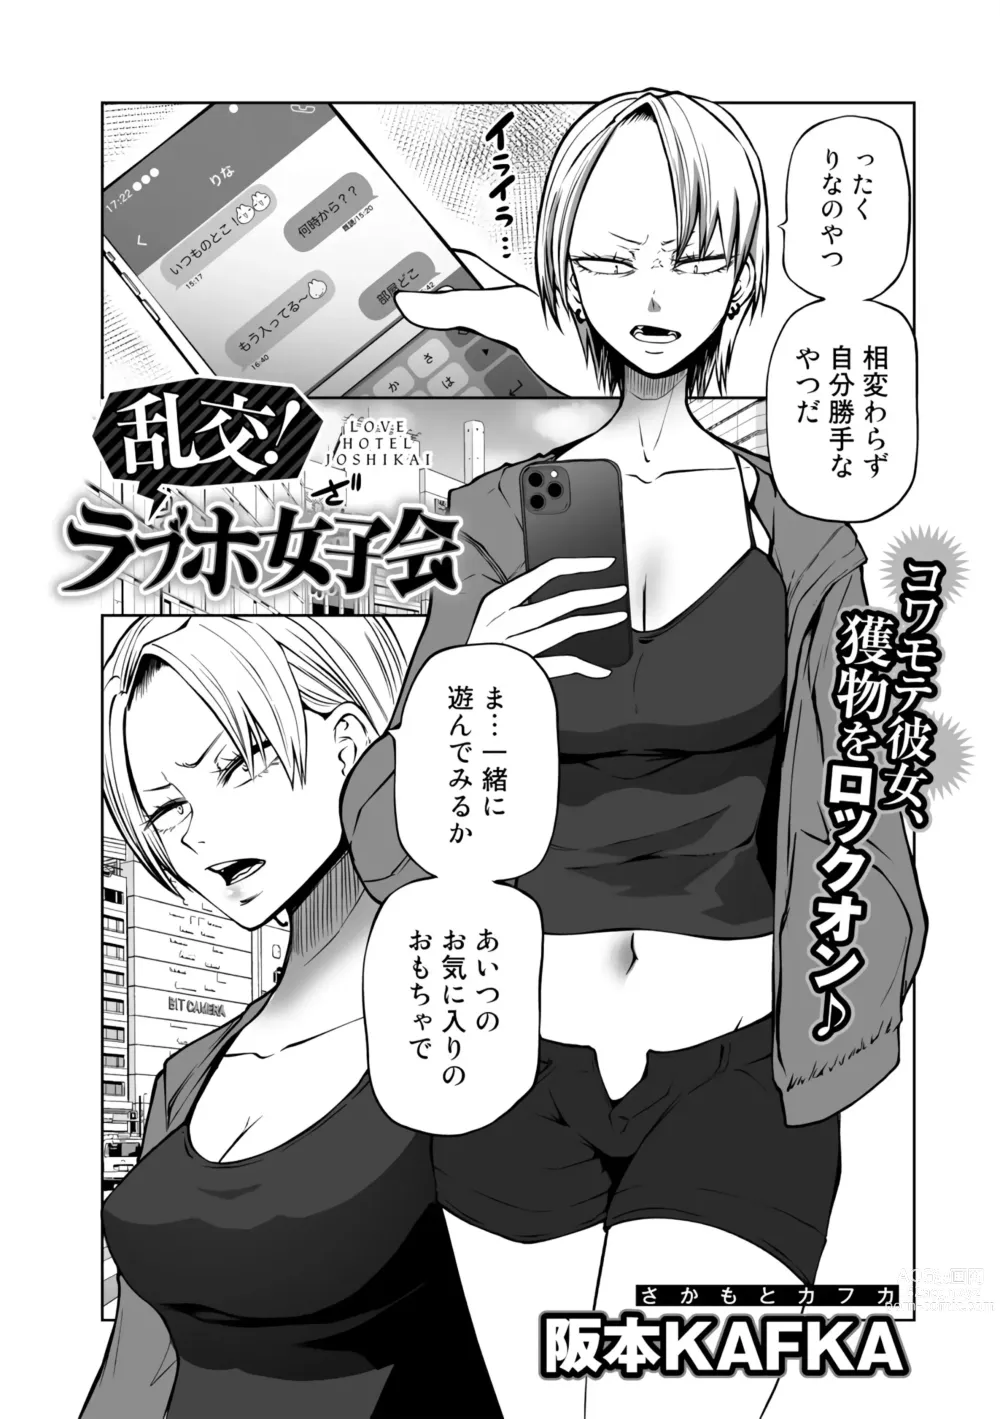 Page 27 of manga Love Hotel Joshikai Ch 1-6